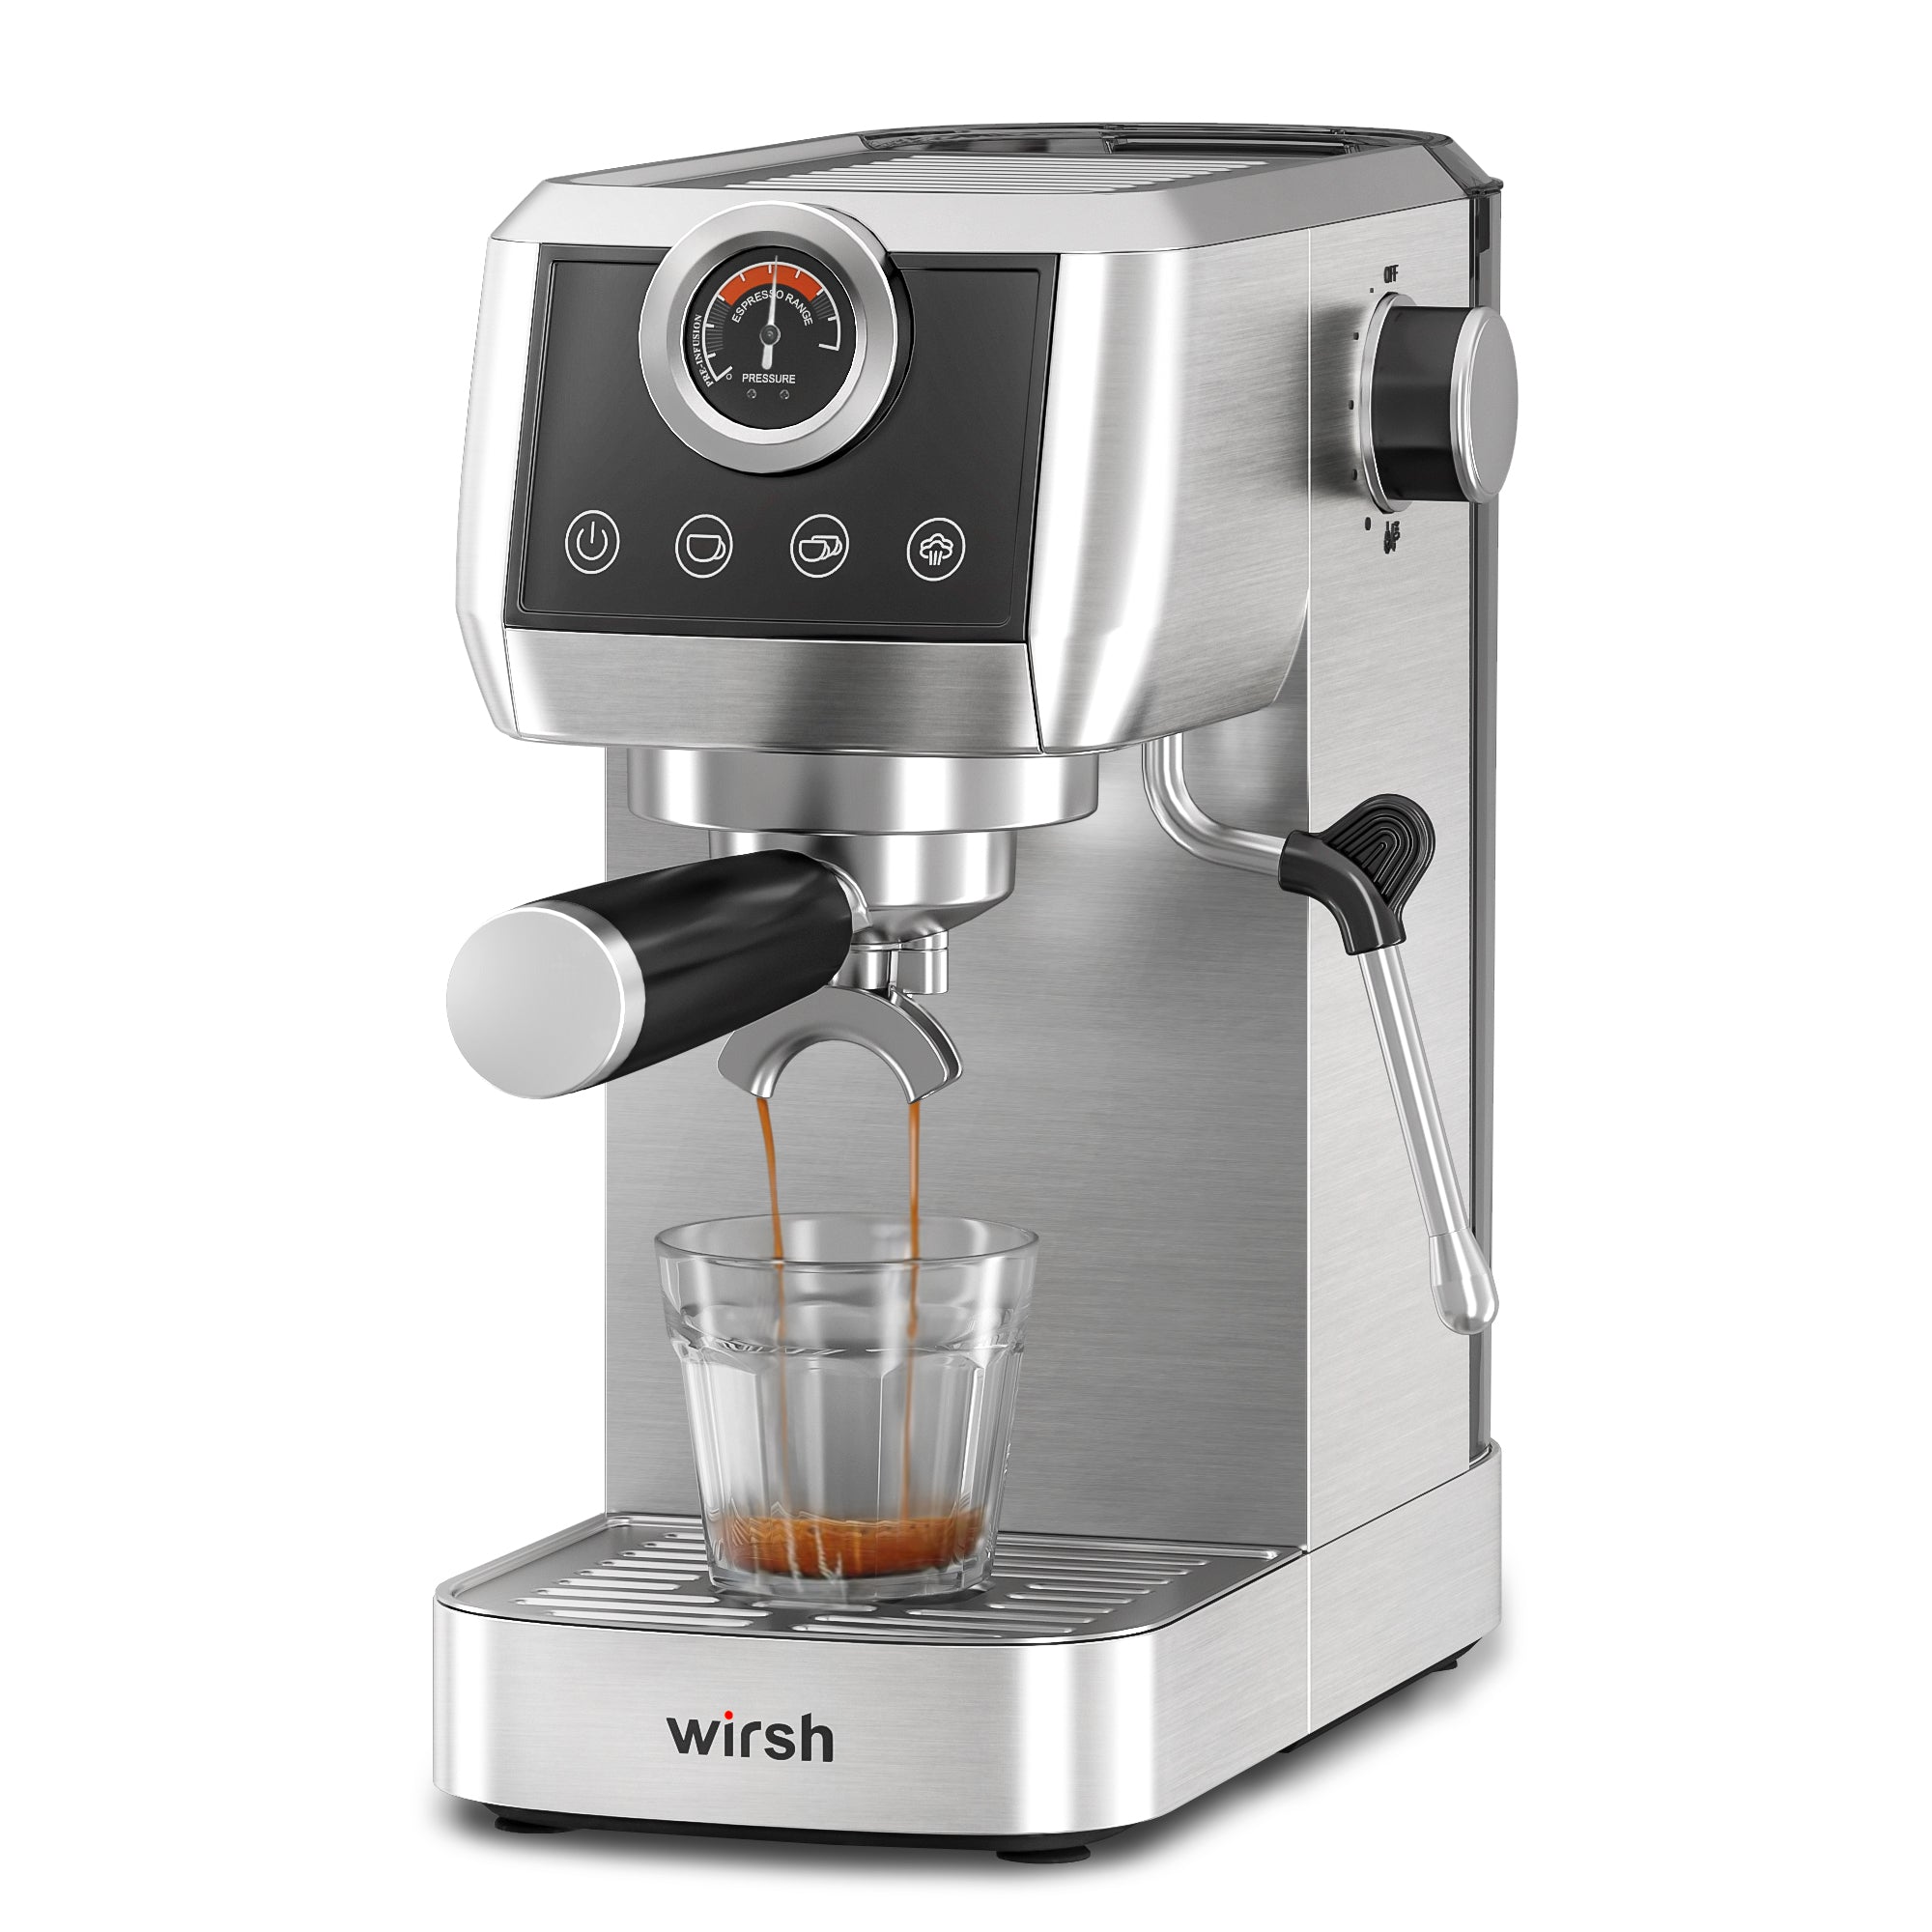 20bar Electric Espresso Italian Coffee Machine Maker Pressure